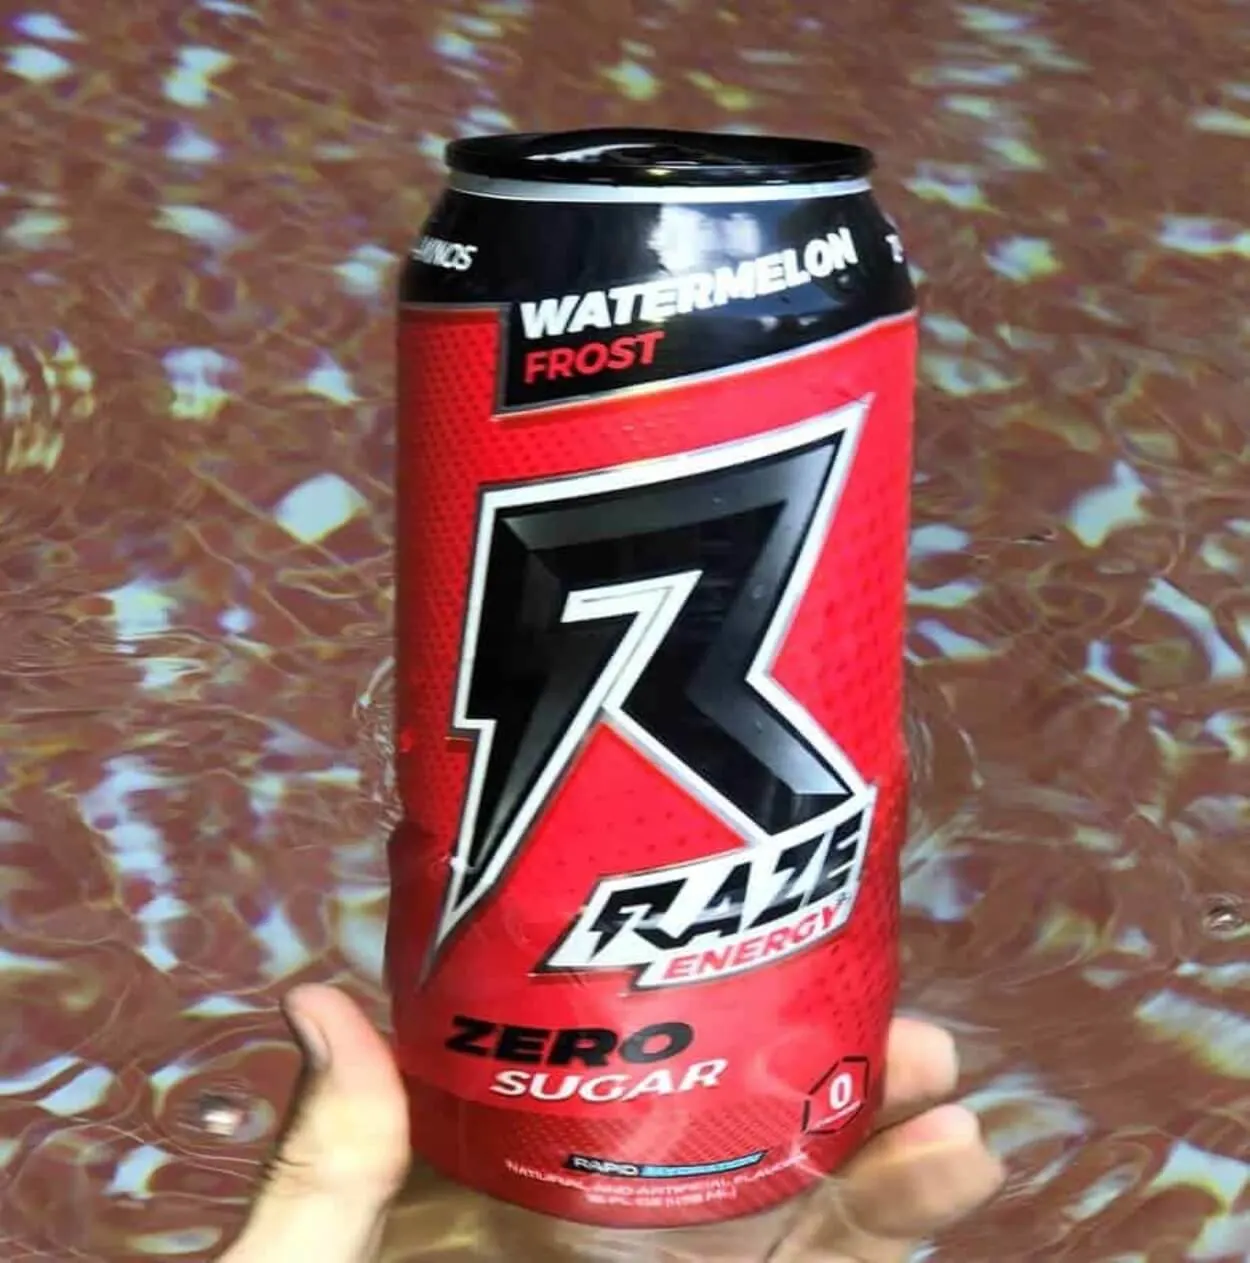 A can of Raze Energy 